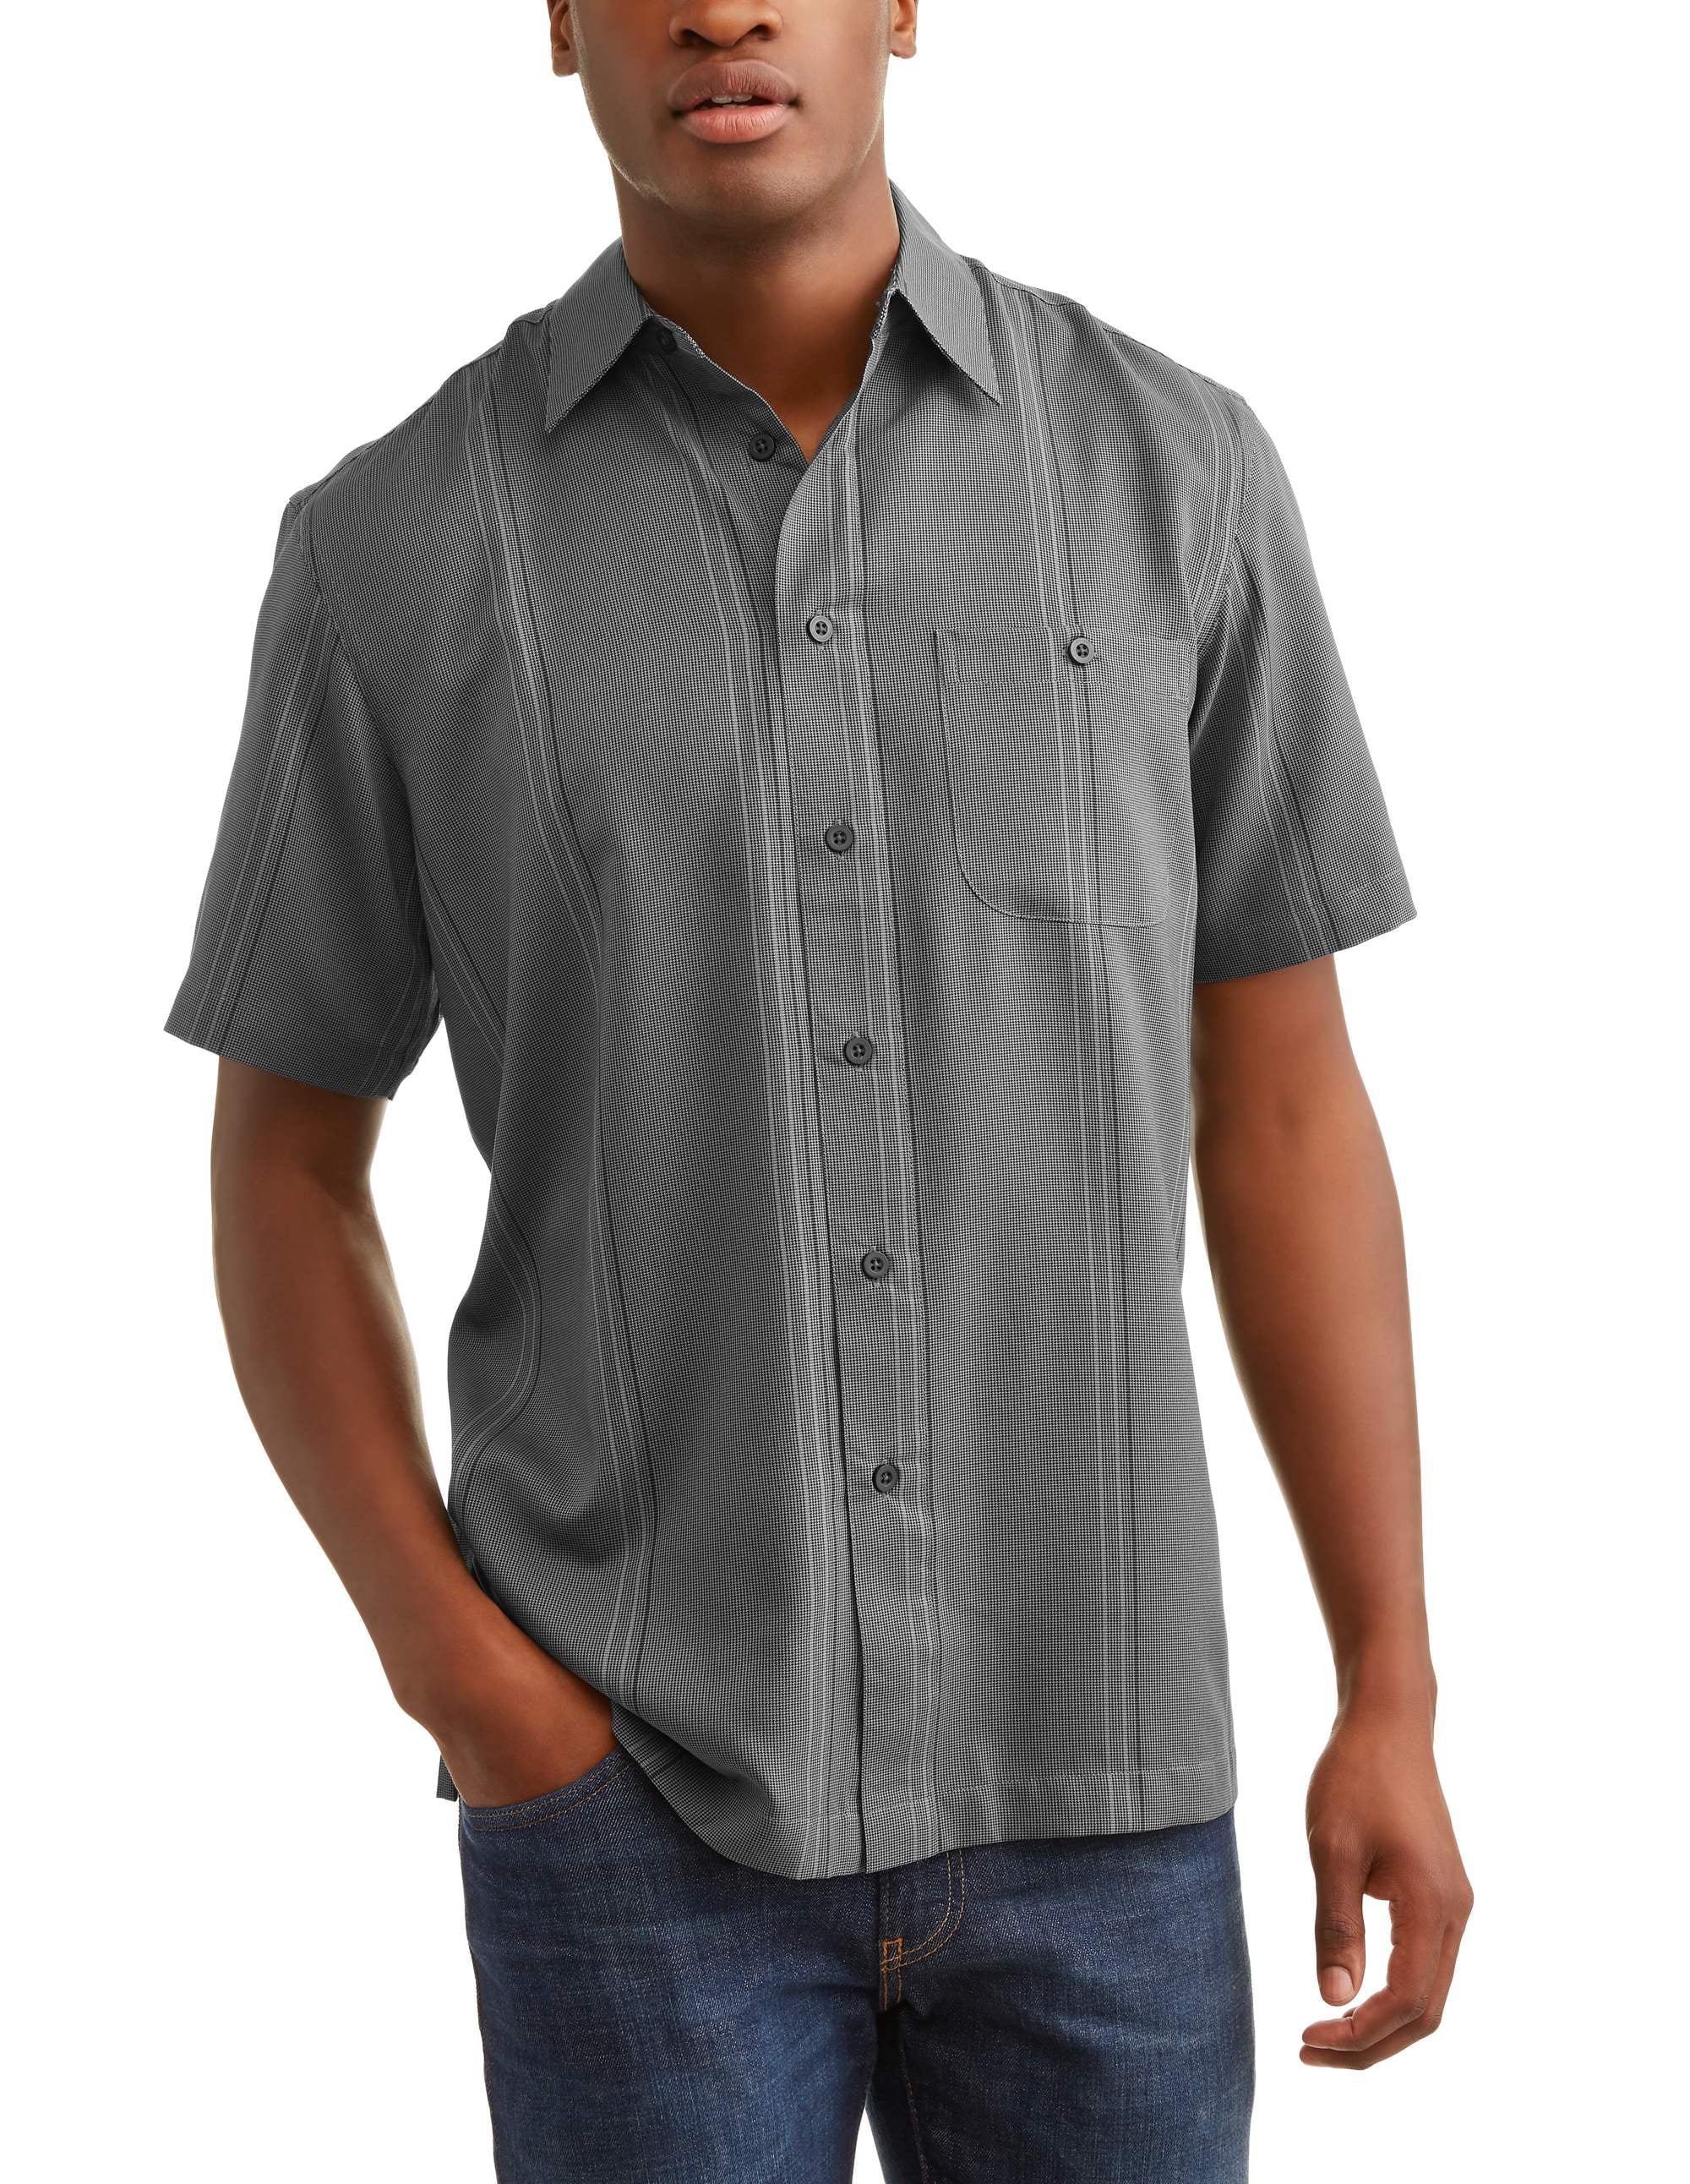 GEORGE - Big and Tall Men's Short Sleeve Microfiber Shirt - Walmart.com ...